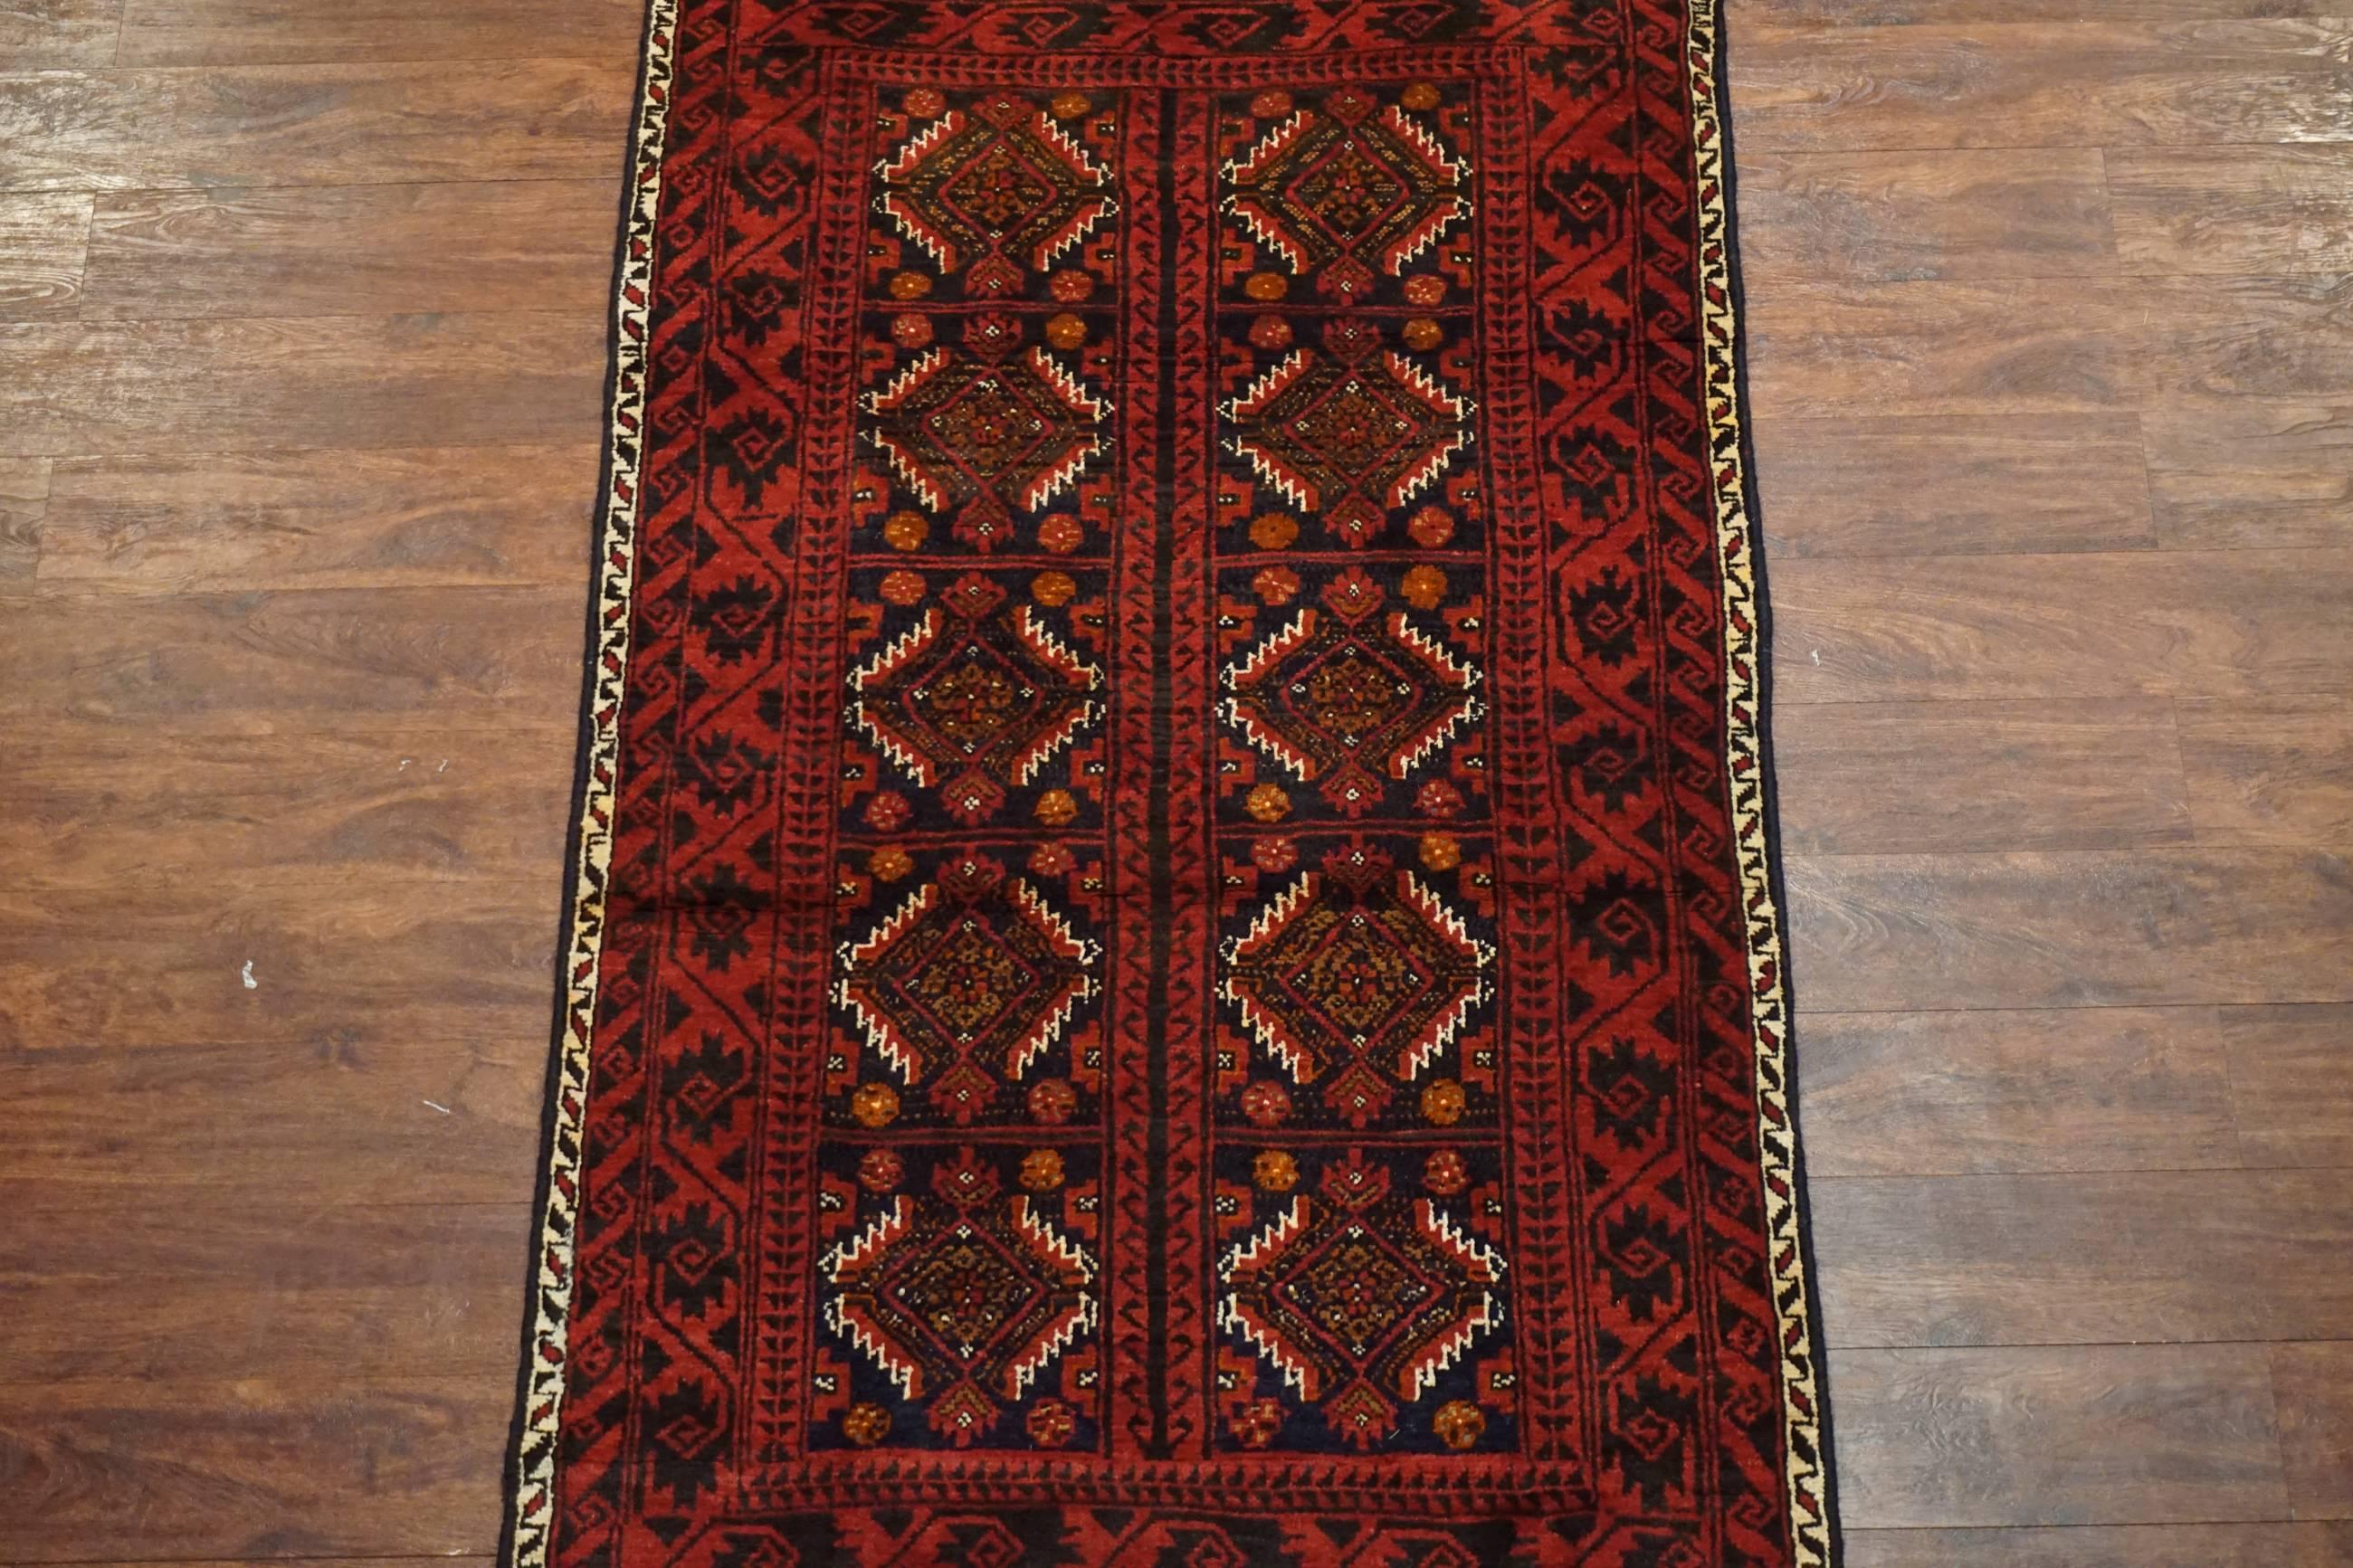 Vintage Persian Baluchi area rug, circa 1940

Measures: 3' 3